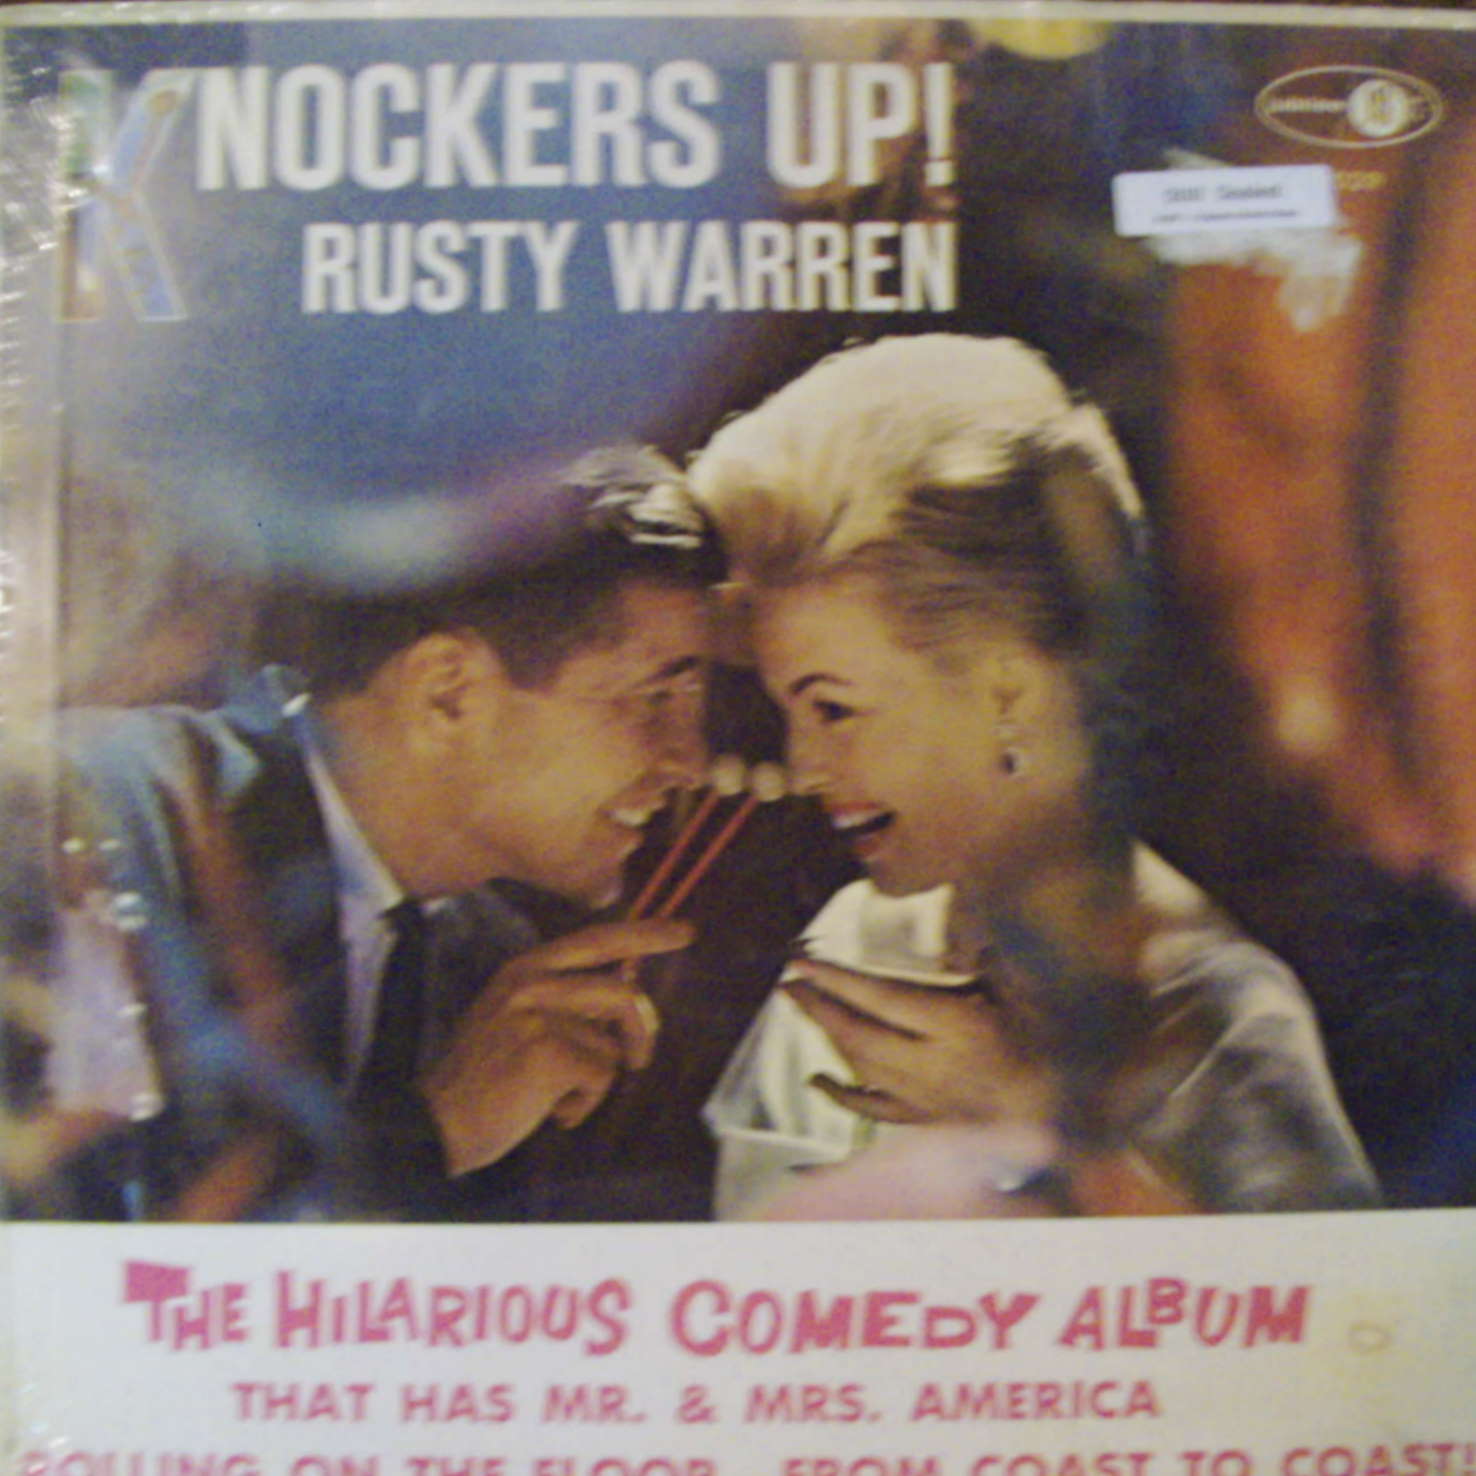 Rusty Warren / Knockers Up